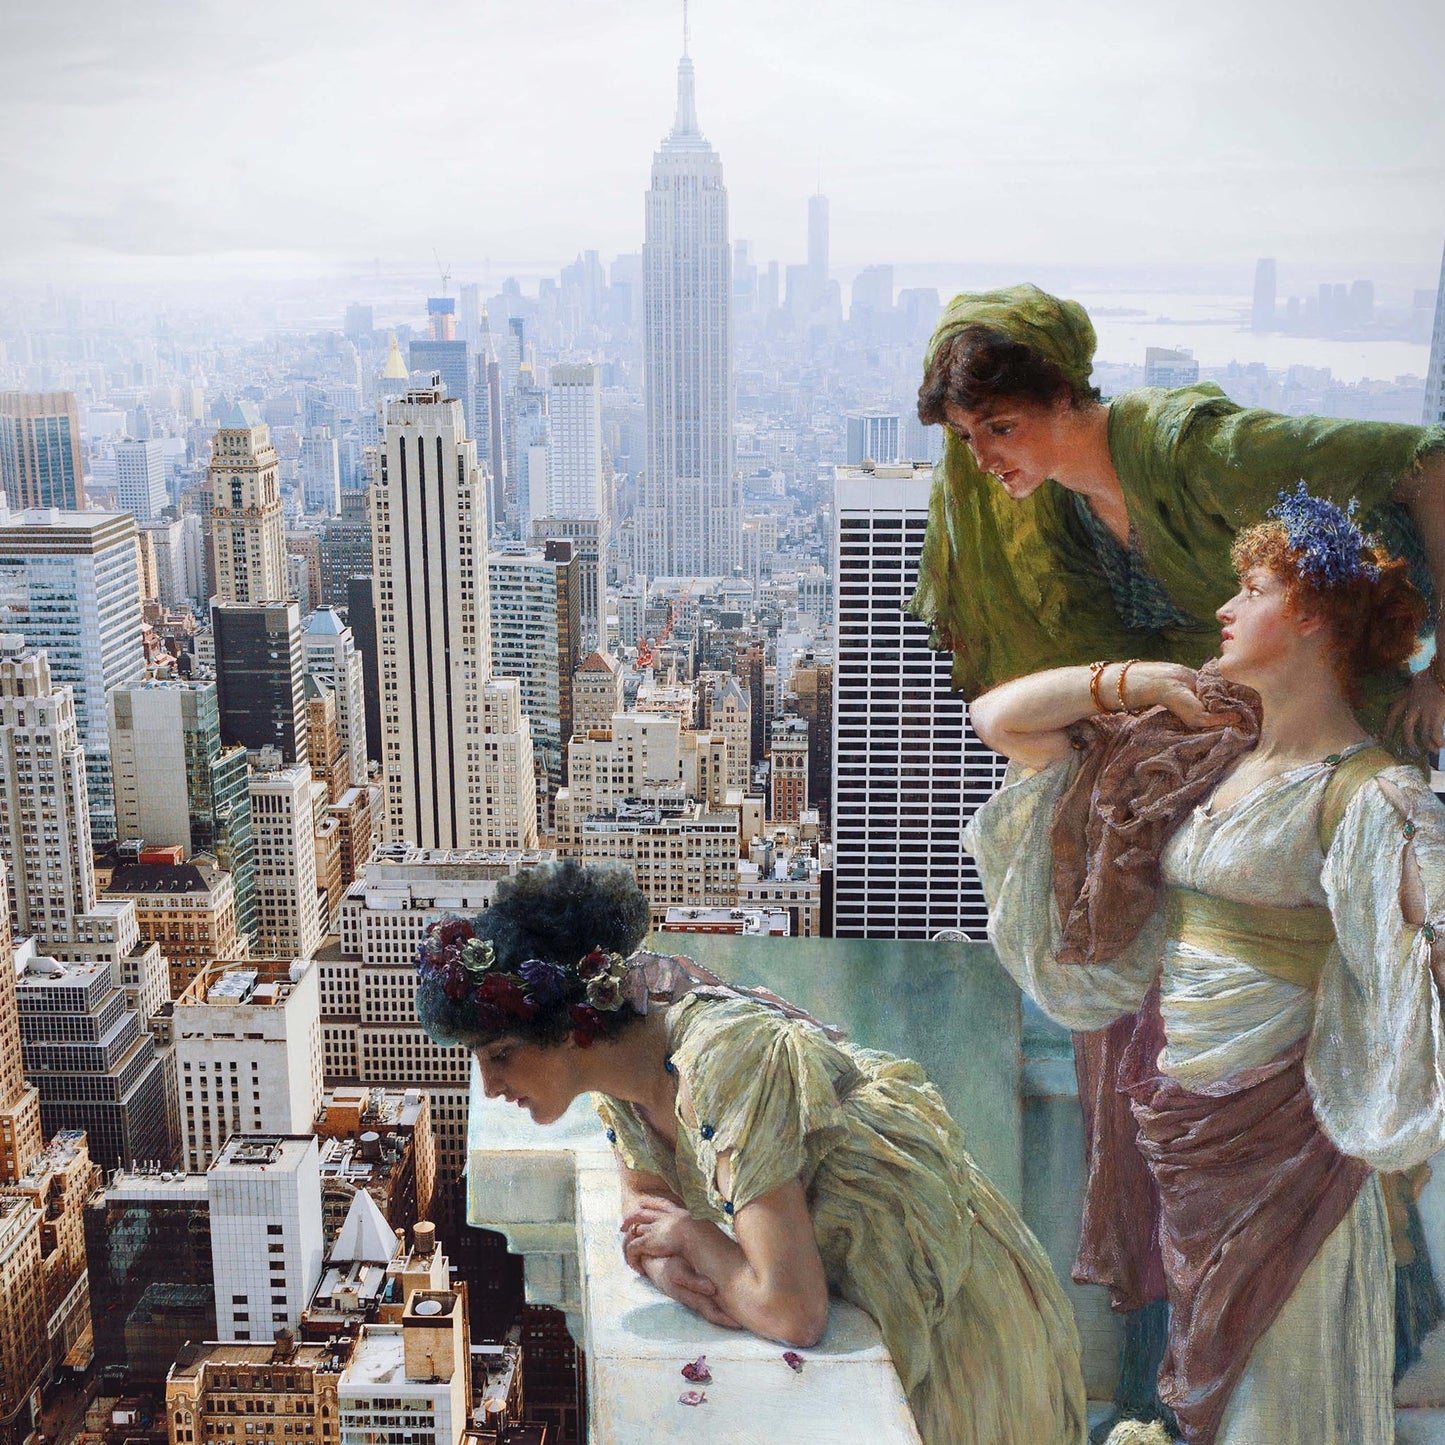 "Manhattan View" fine art print